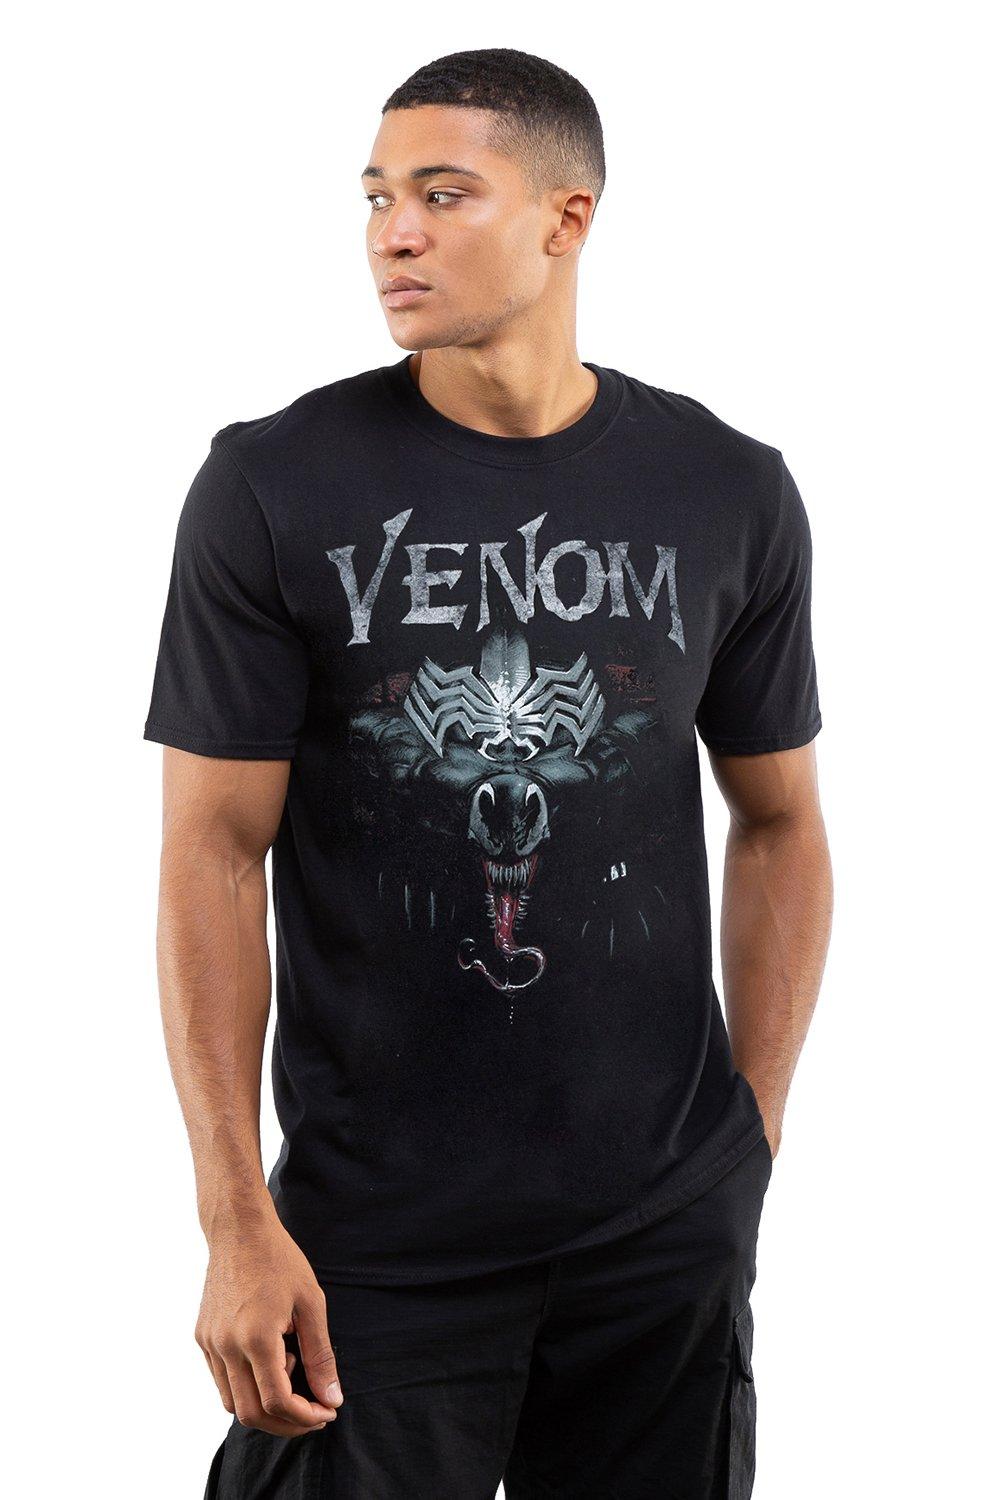 Хлопковая футболка Venom Sneak Marvel, черный хлопковая футболка venom antihero marvel черный